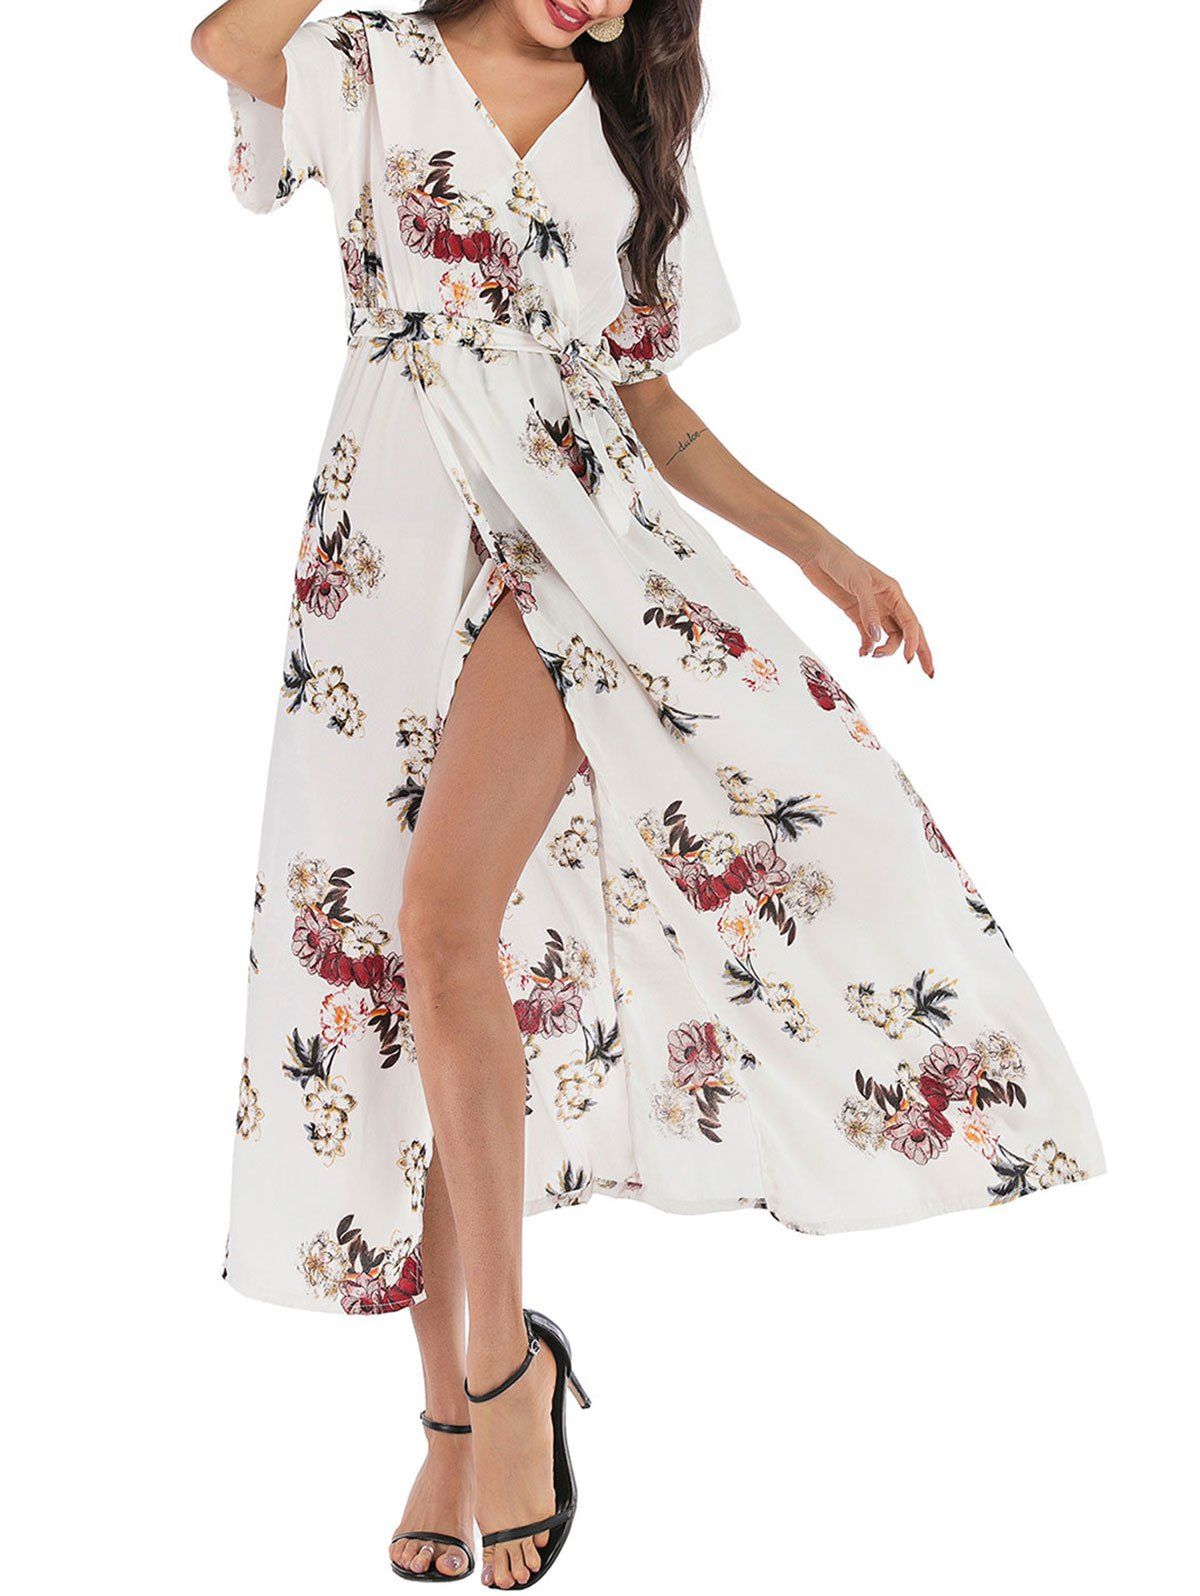 Flower Print Slit Belted Surplice Dress - WHITE XL